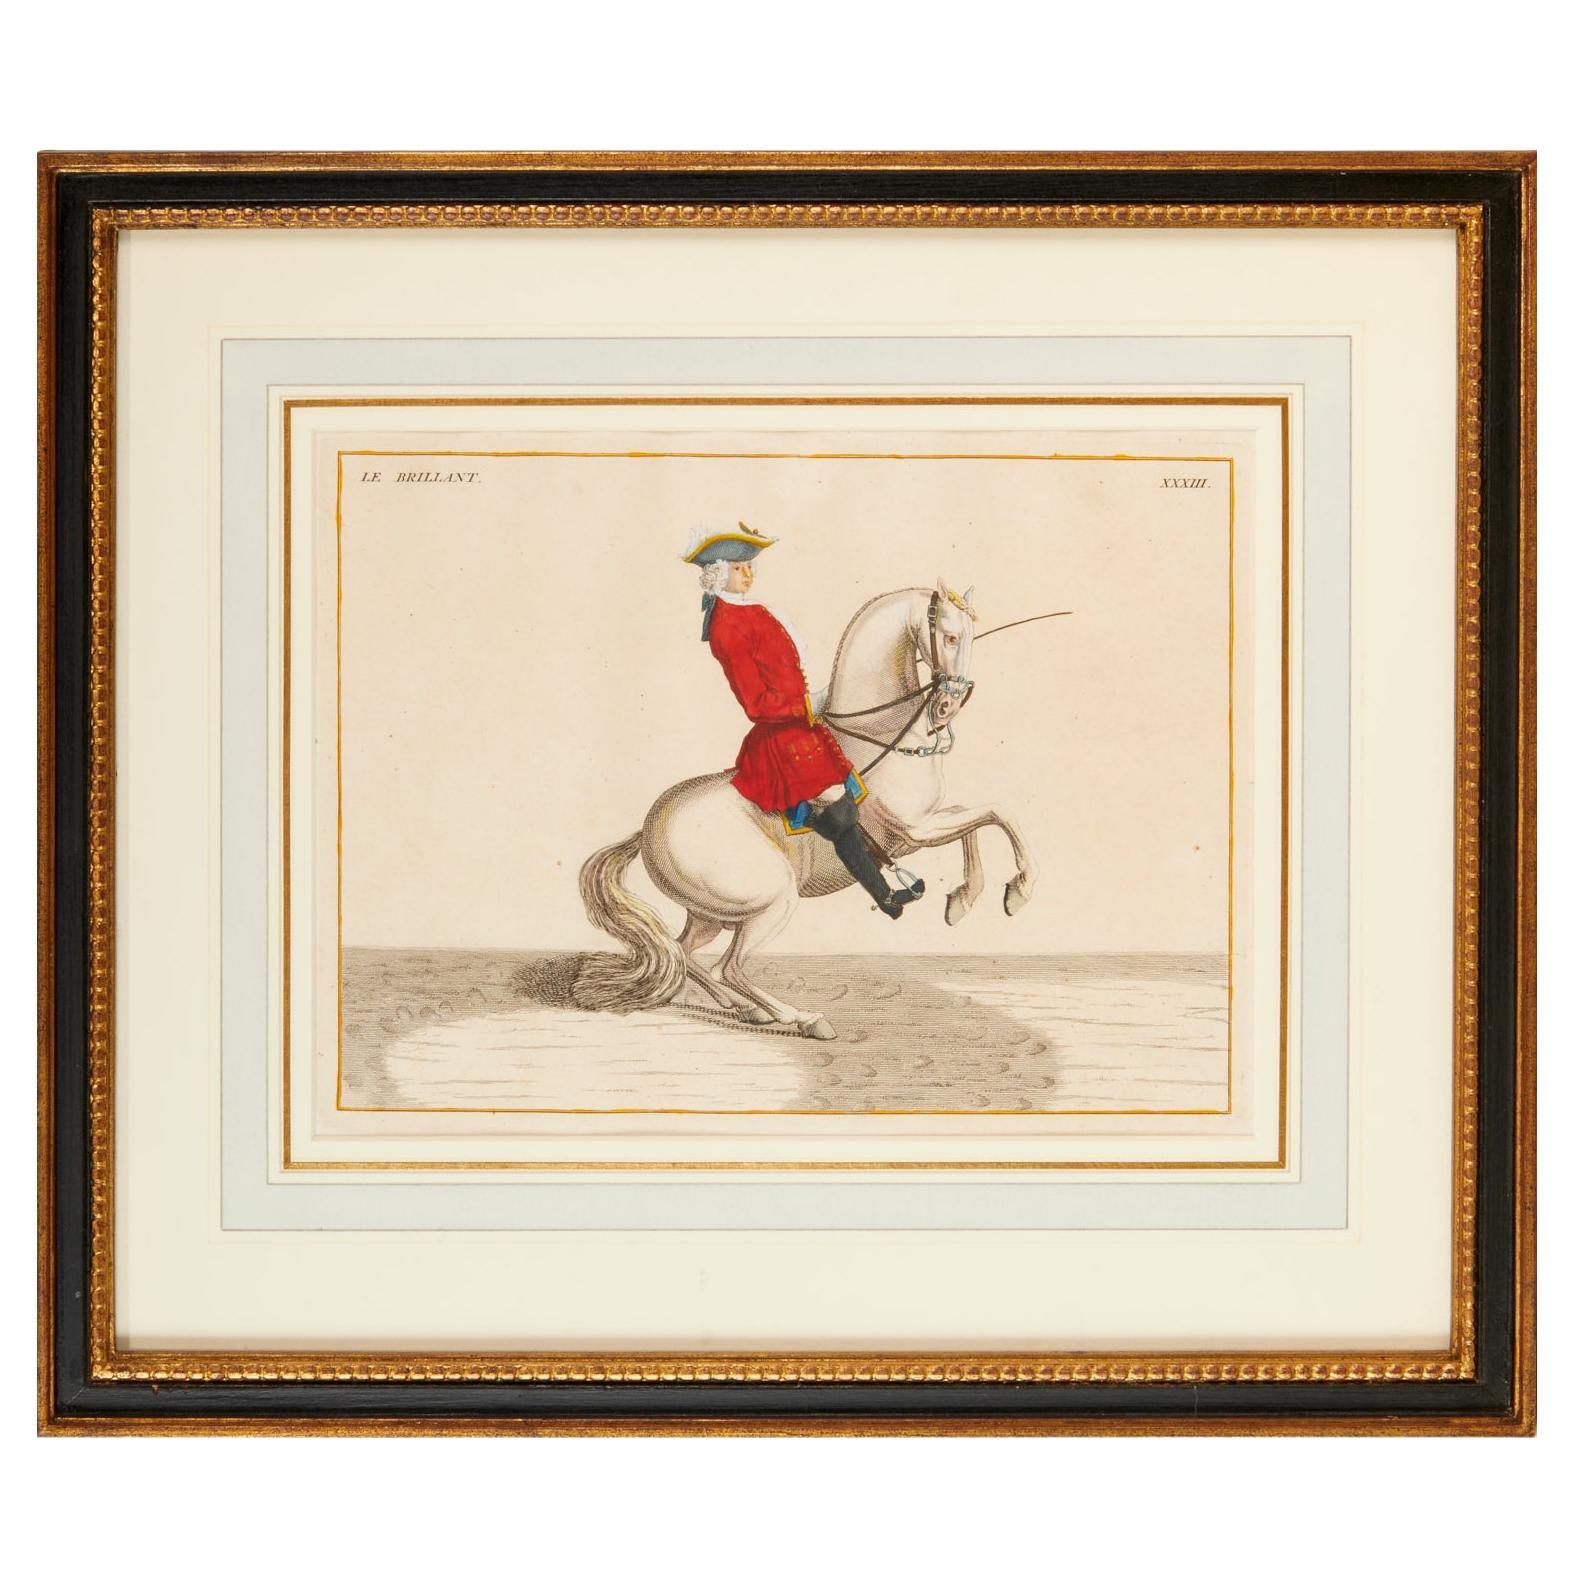 Baron Rais d'Eisenberg, Hand-Colored Equestrian Engraving c. 1747, "Le Brillant"